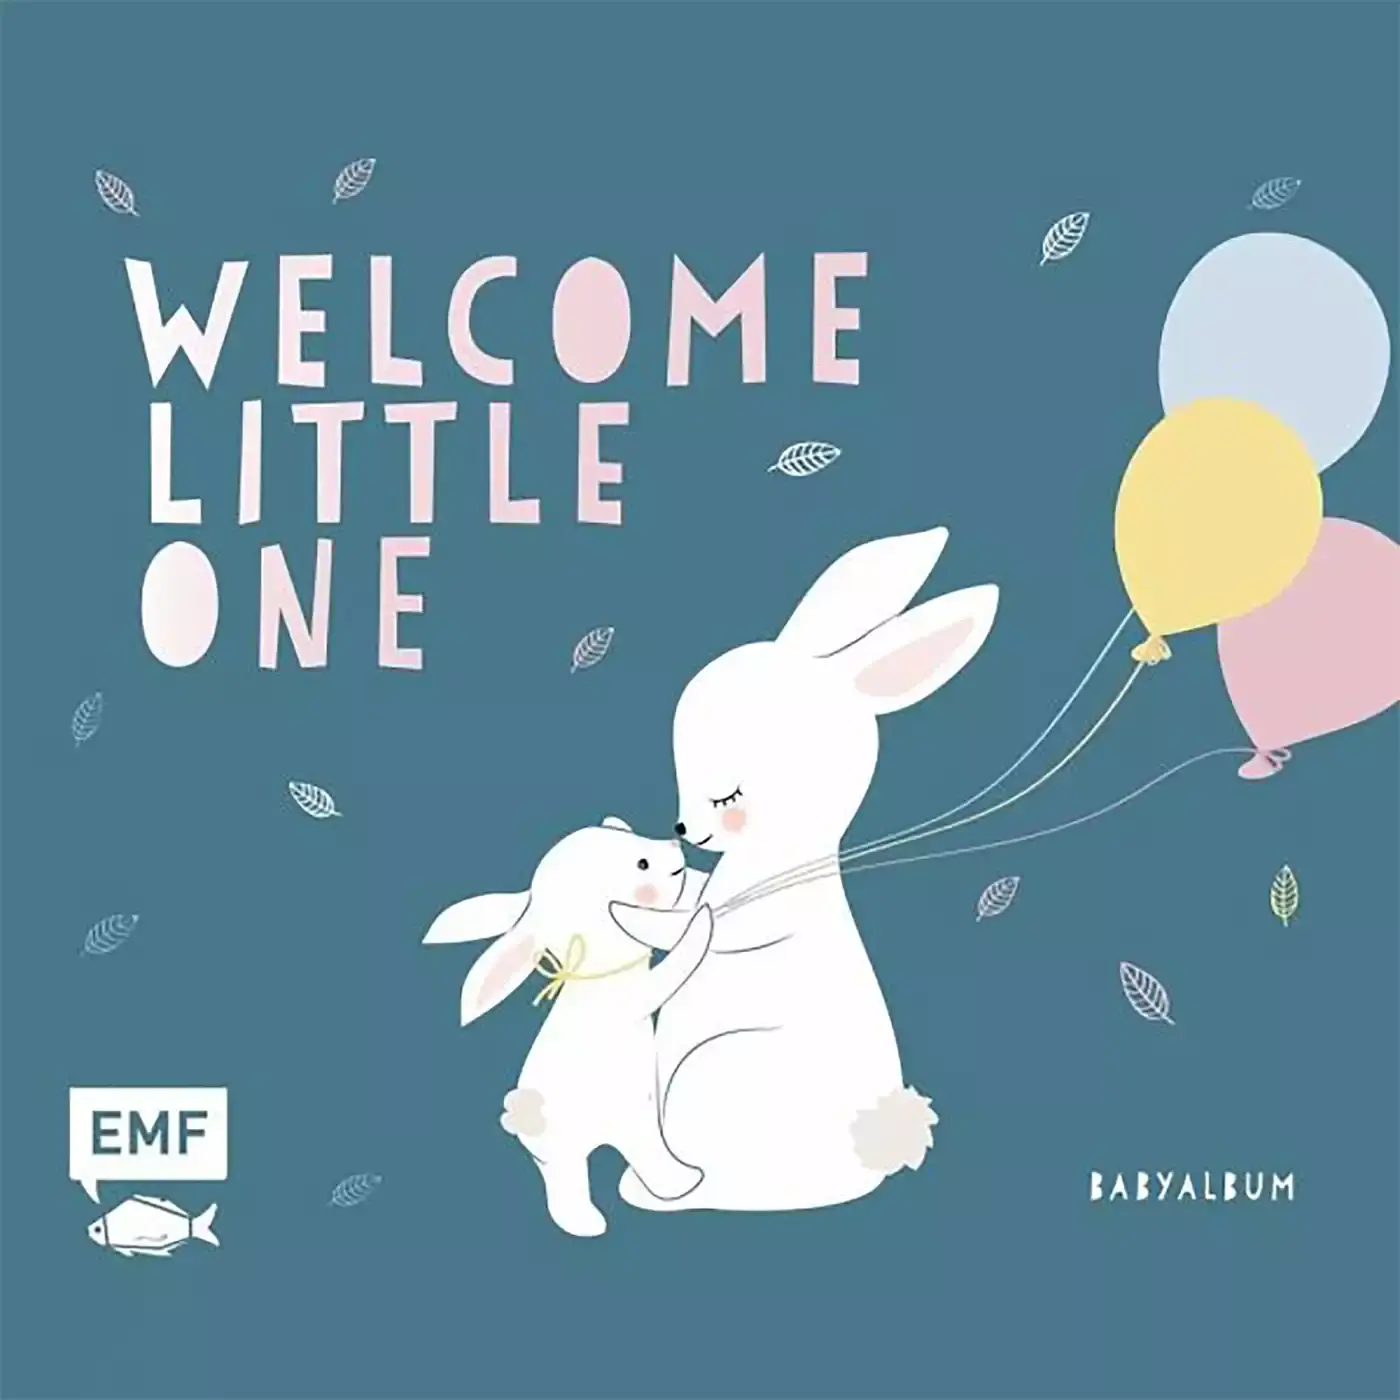 Babyalbum Welcome little one EMF Blau 2000577521401 1